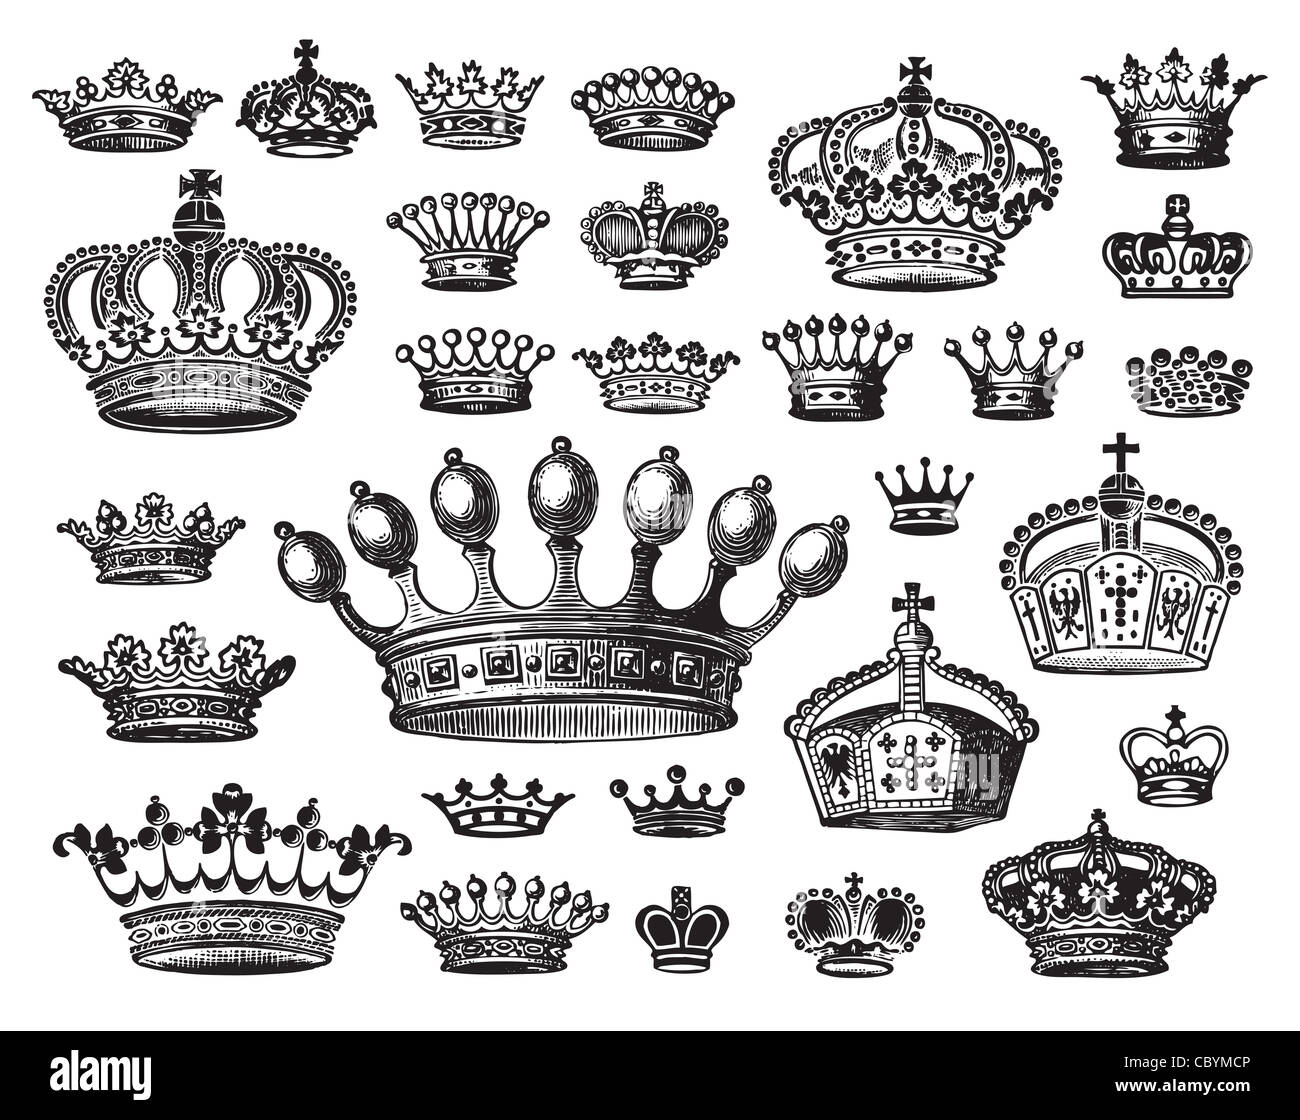 set of vintage crown drowings. vintage design elements, icons, illustrations. Stock Photo